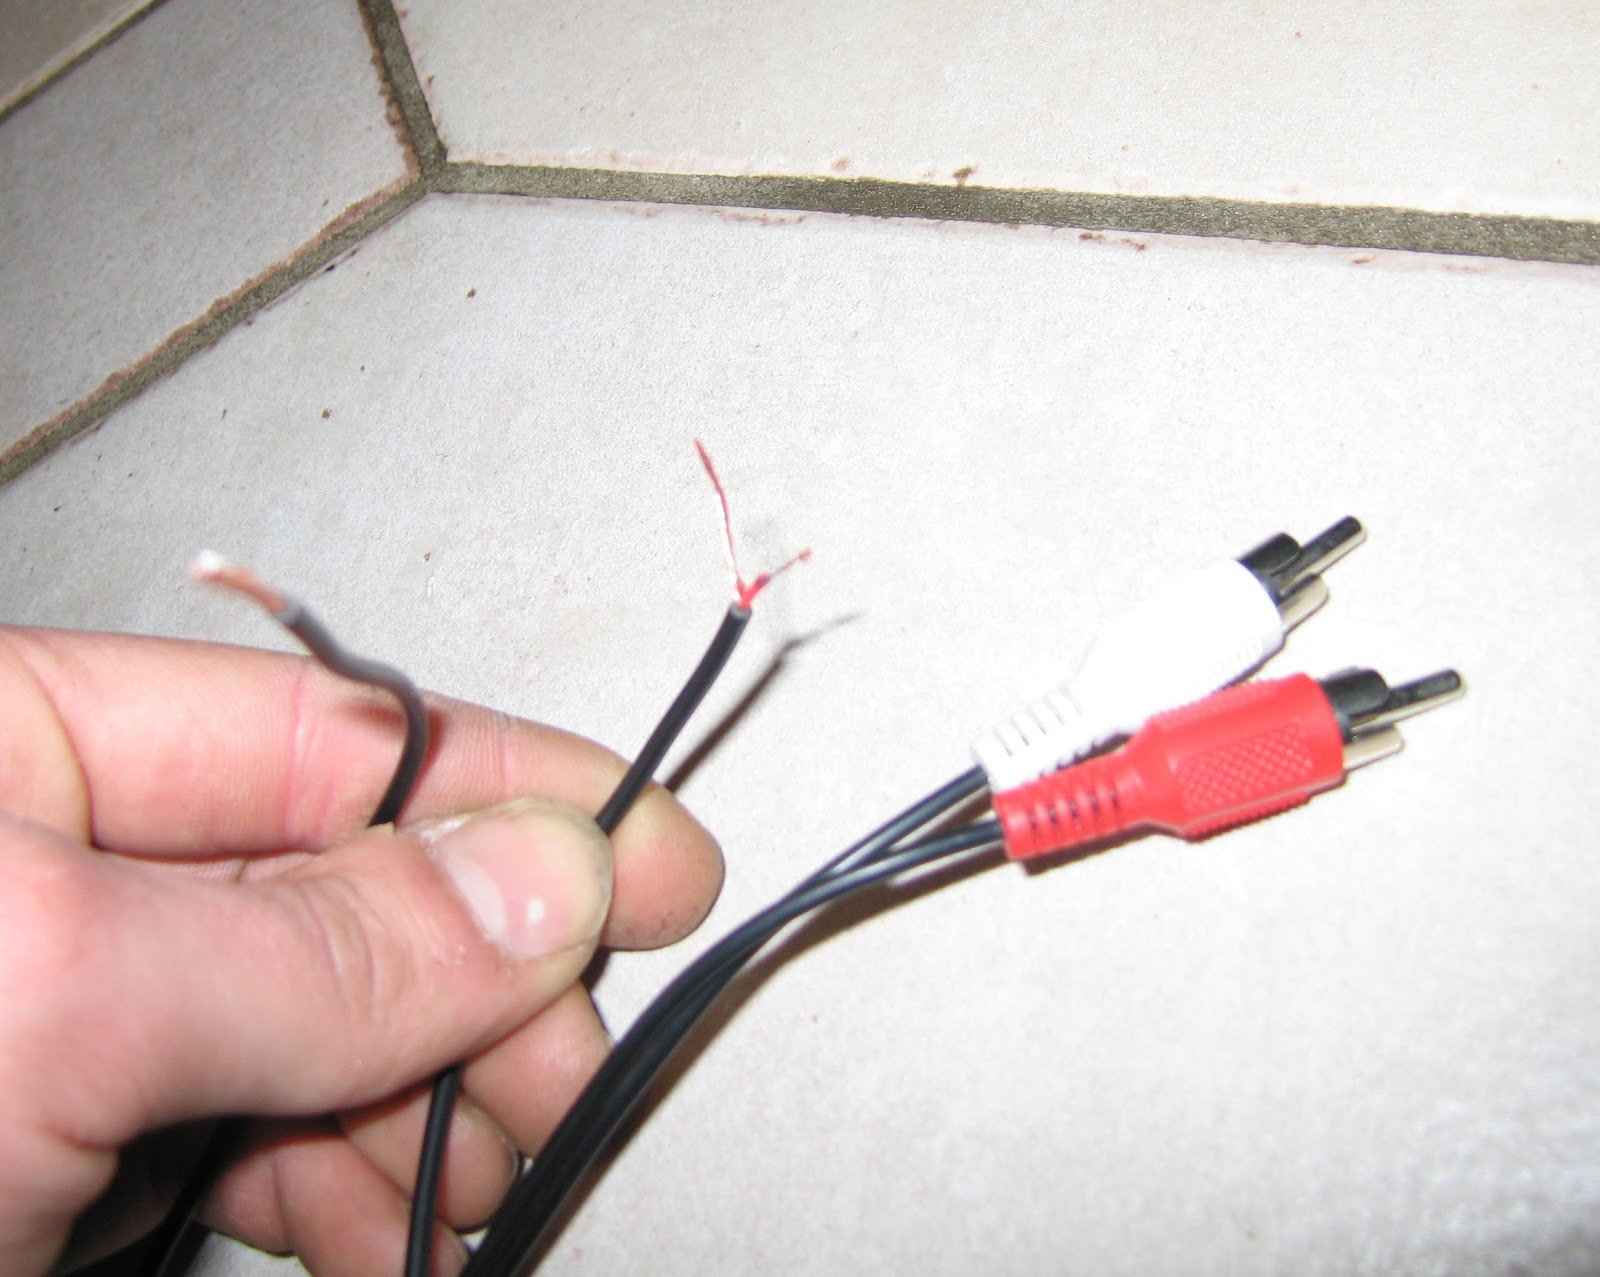 Installing subwoofer, wires